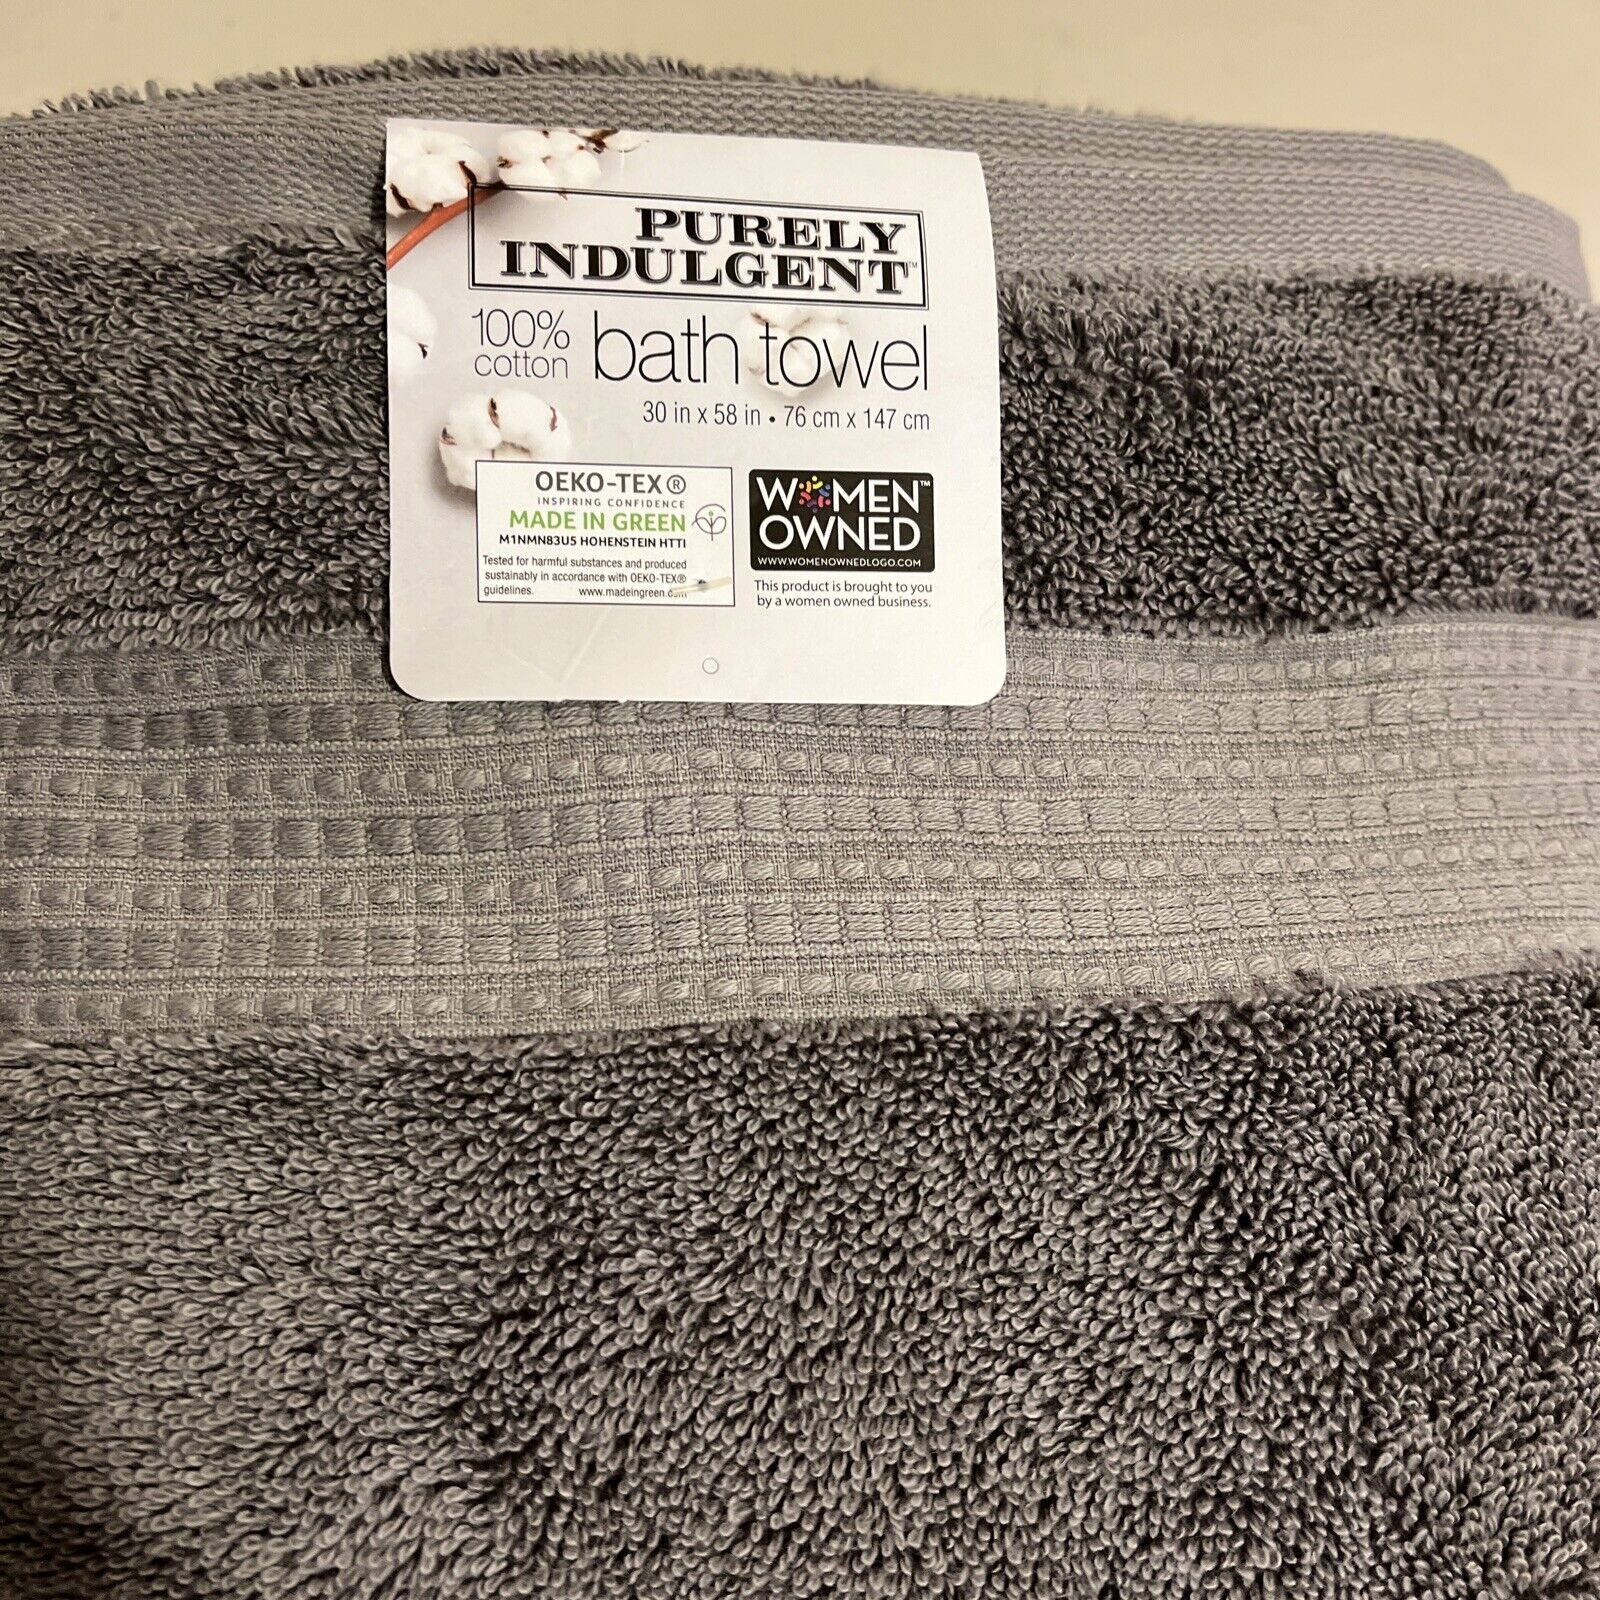 Lot Of 2 Purely Indulgent bath towel 30”X58” White Oeko-Tex Made In Green  NWT